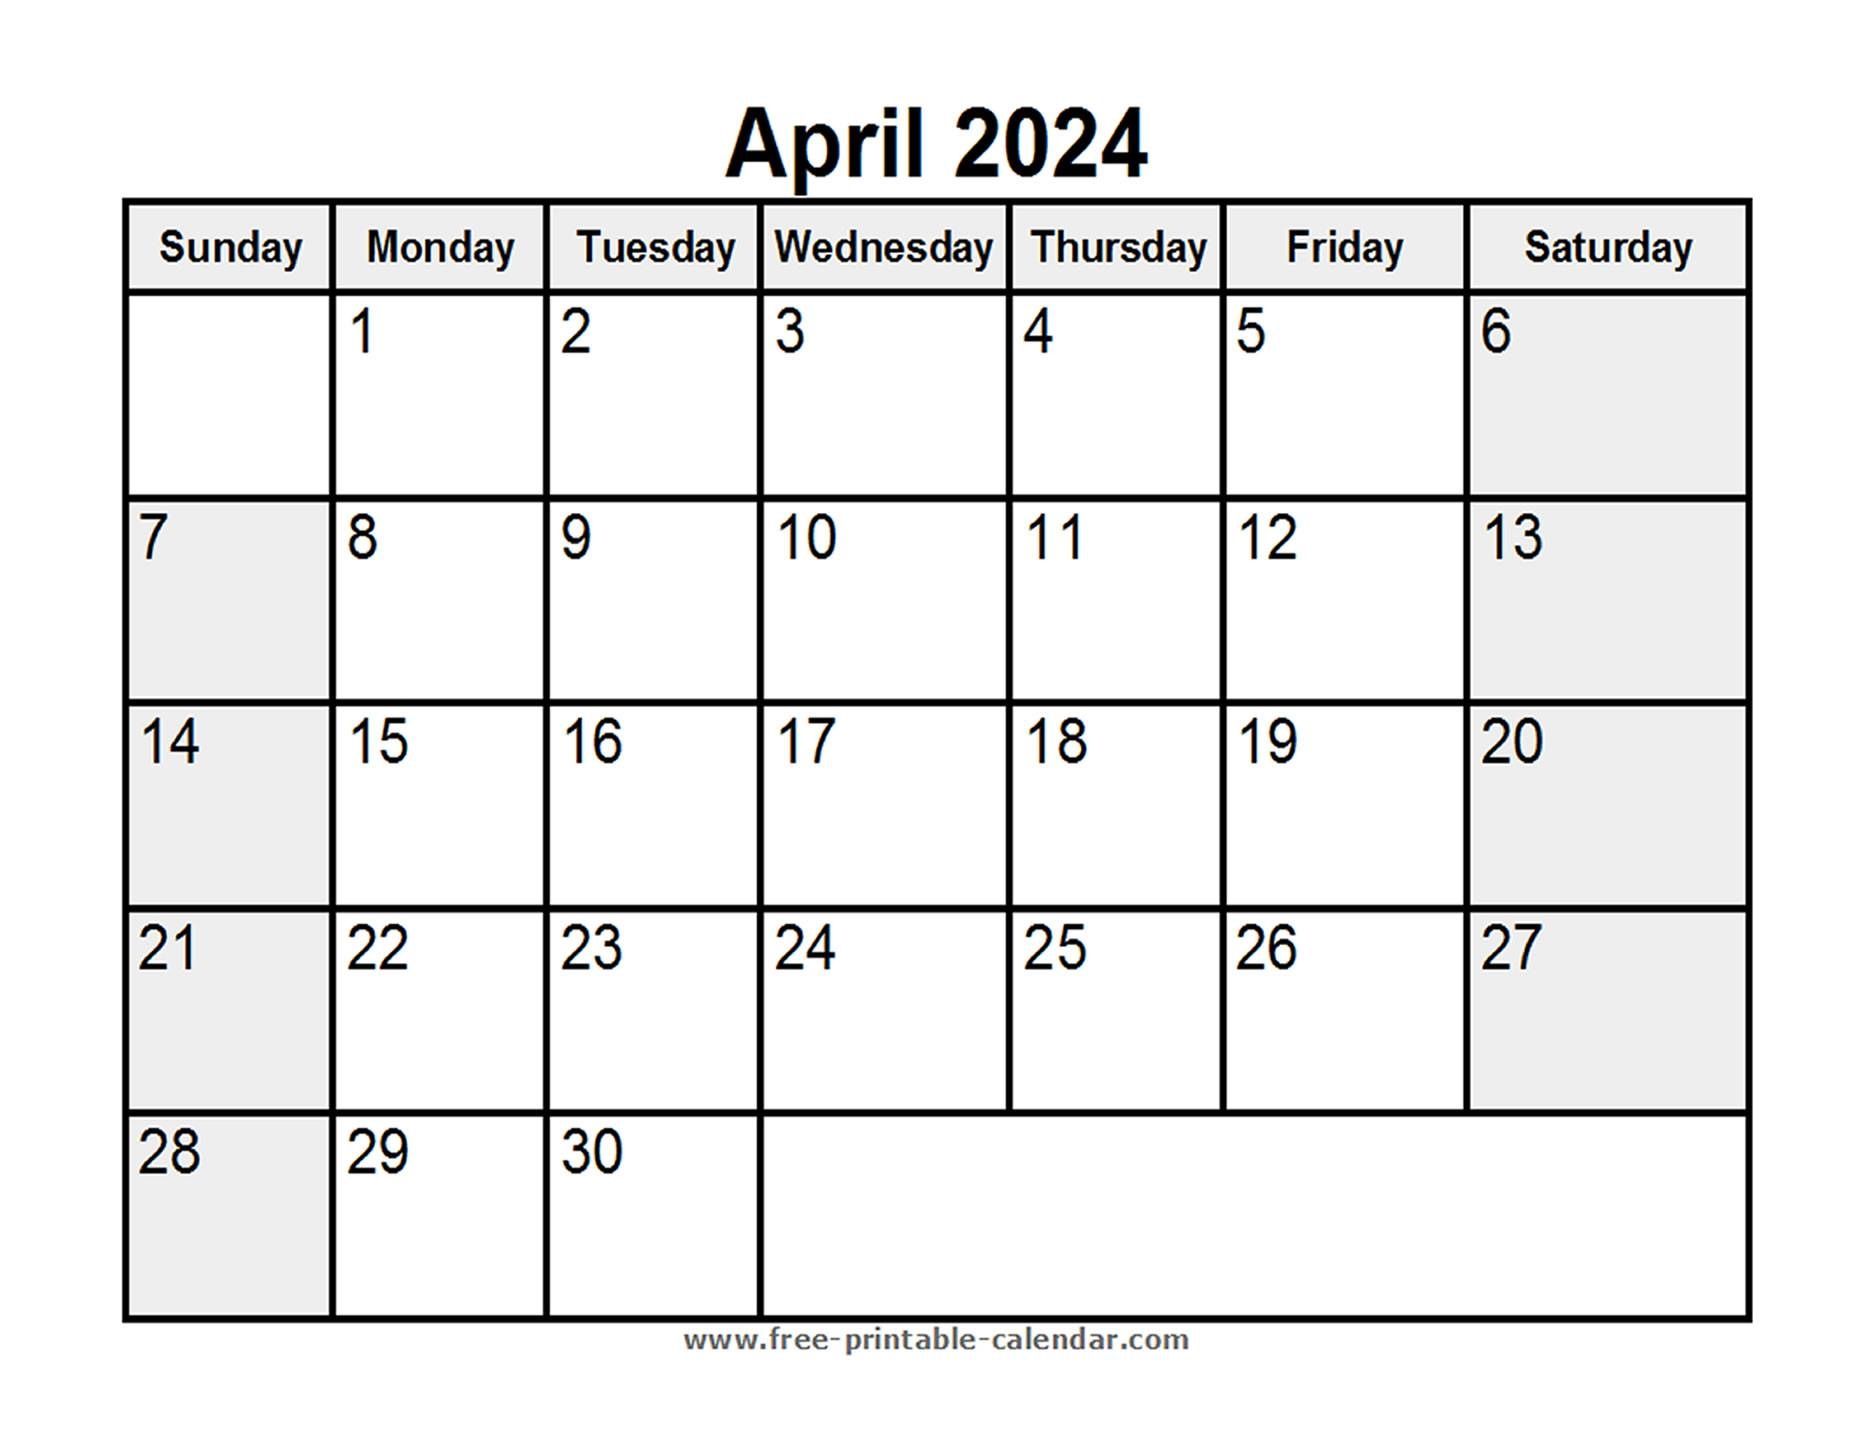 Printable April 2024 Calendar - Free-Printable-Calendar throughout Free Printable Black And White April 2024 Calendar